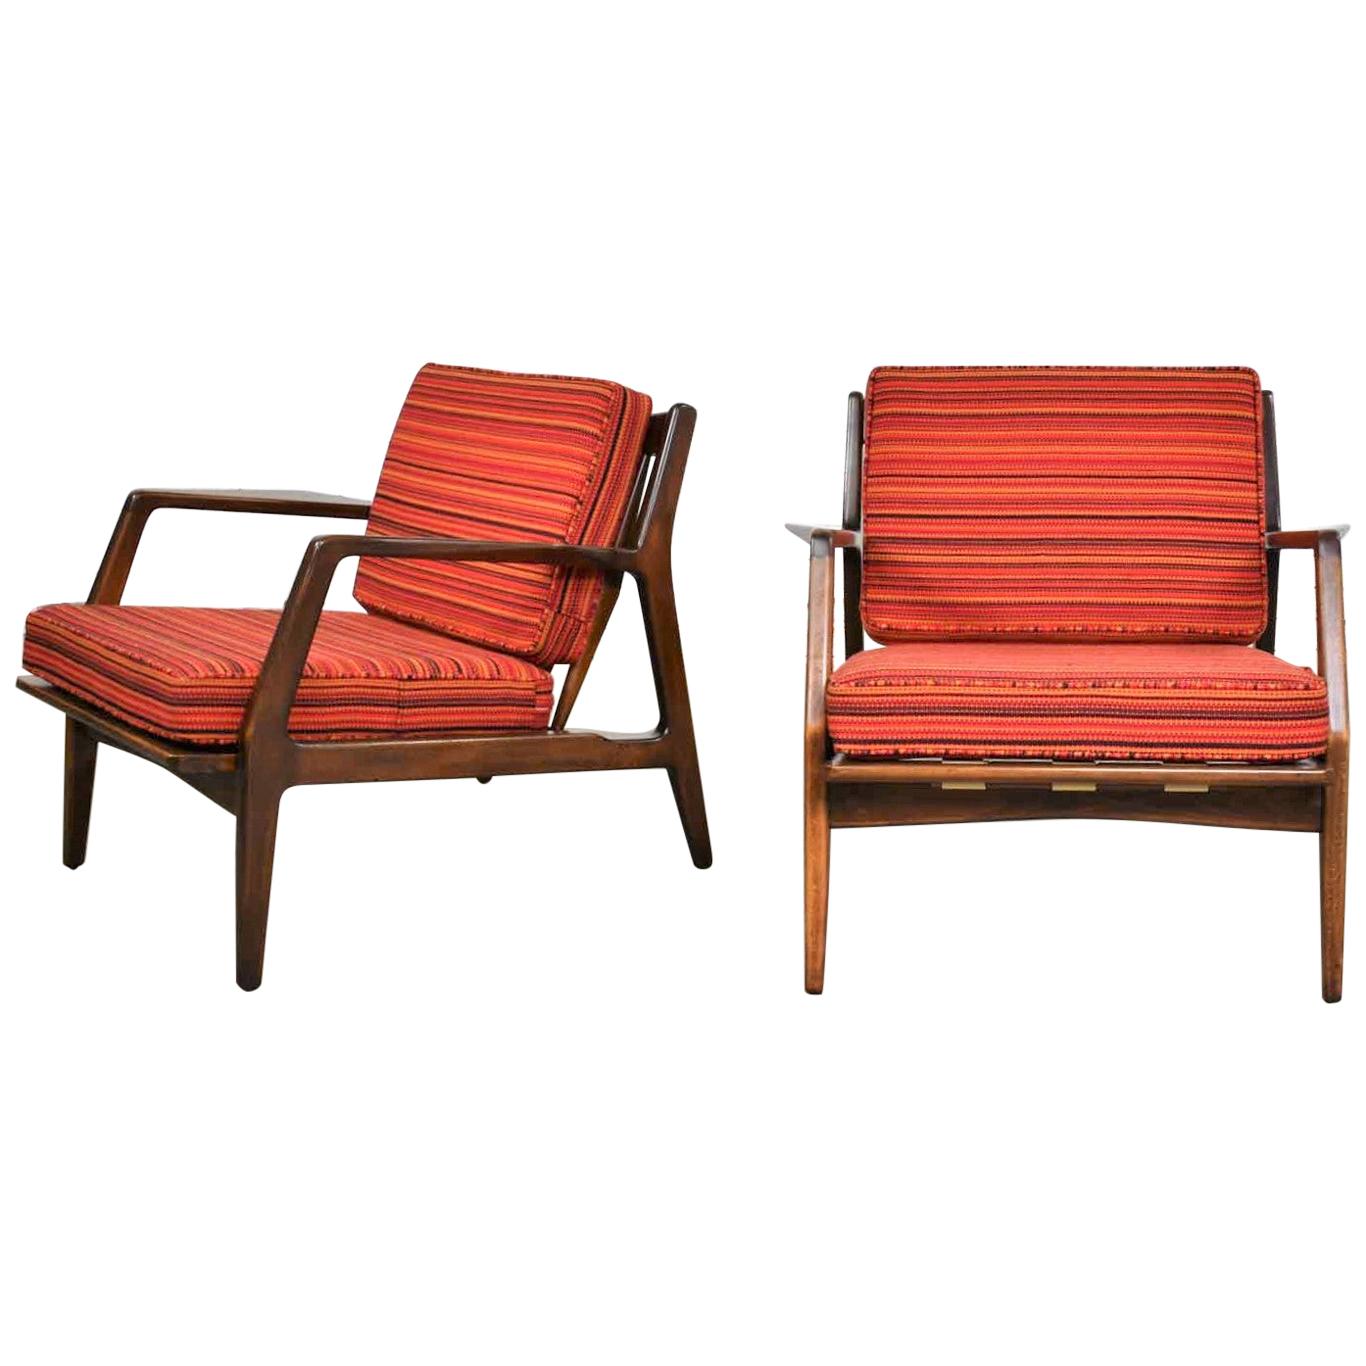 Scandinavian Modern Ib Kofod-Larsen Lounge Chairs for Selig in Red Stripe Fabric